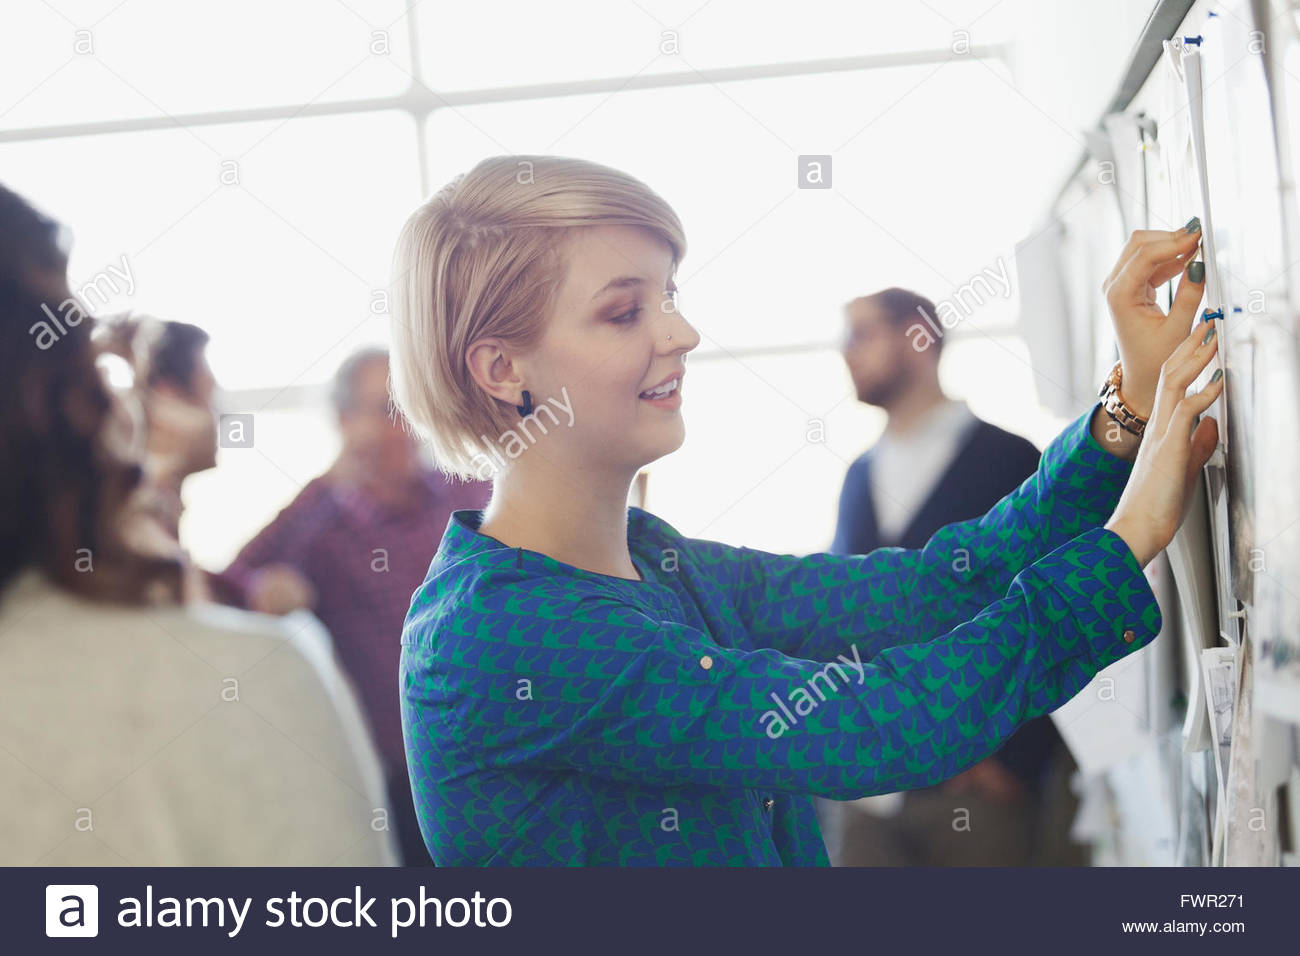 Businesswoman pinning notes on bulletin board Stock Photo